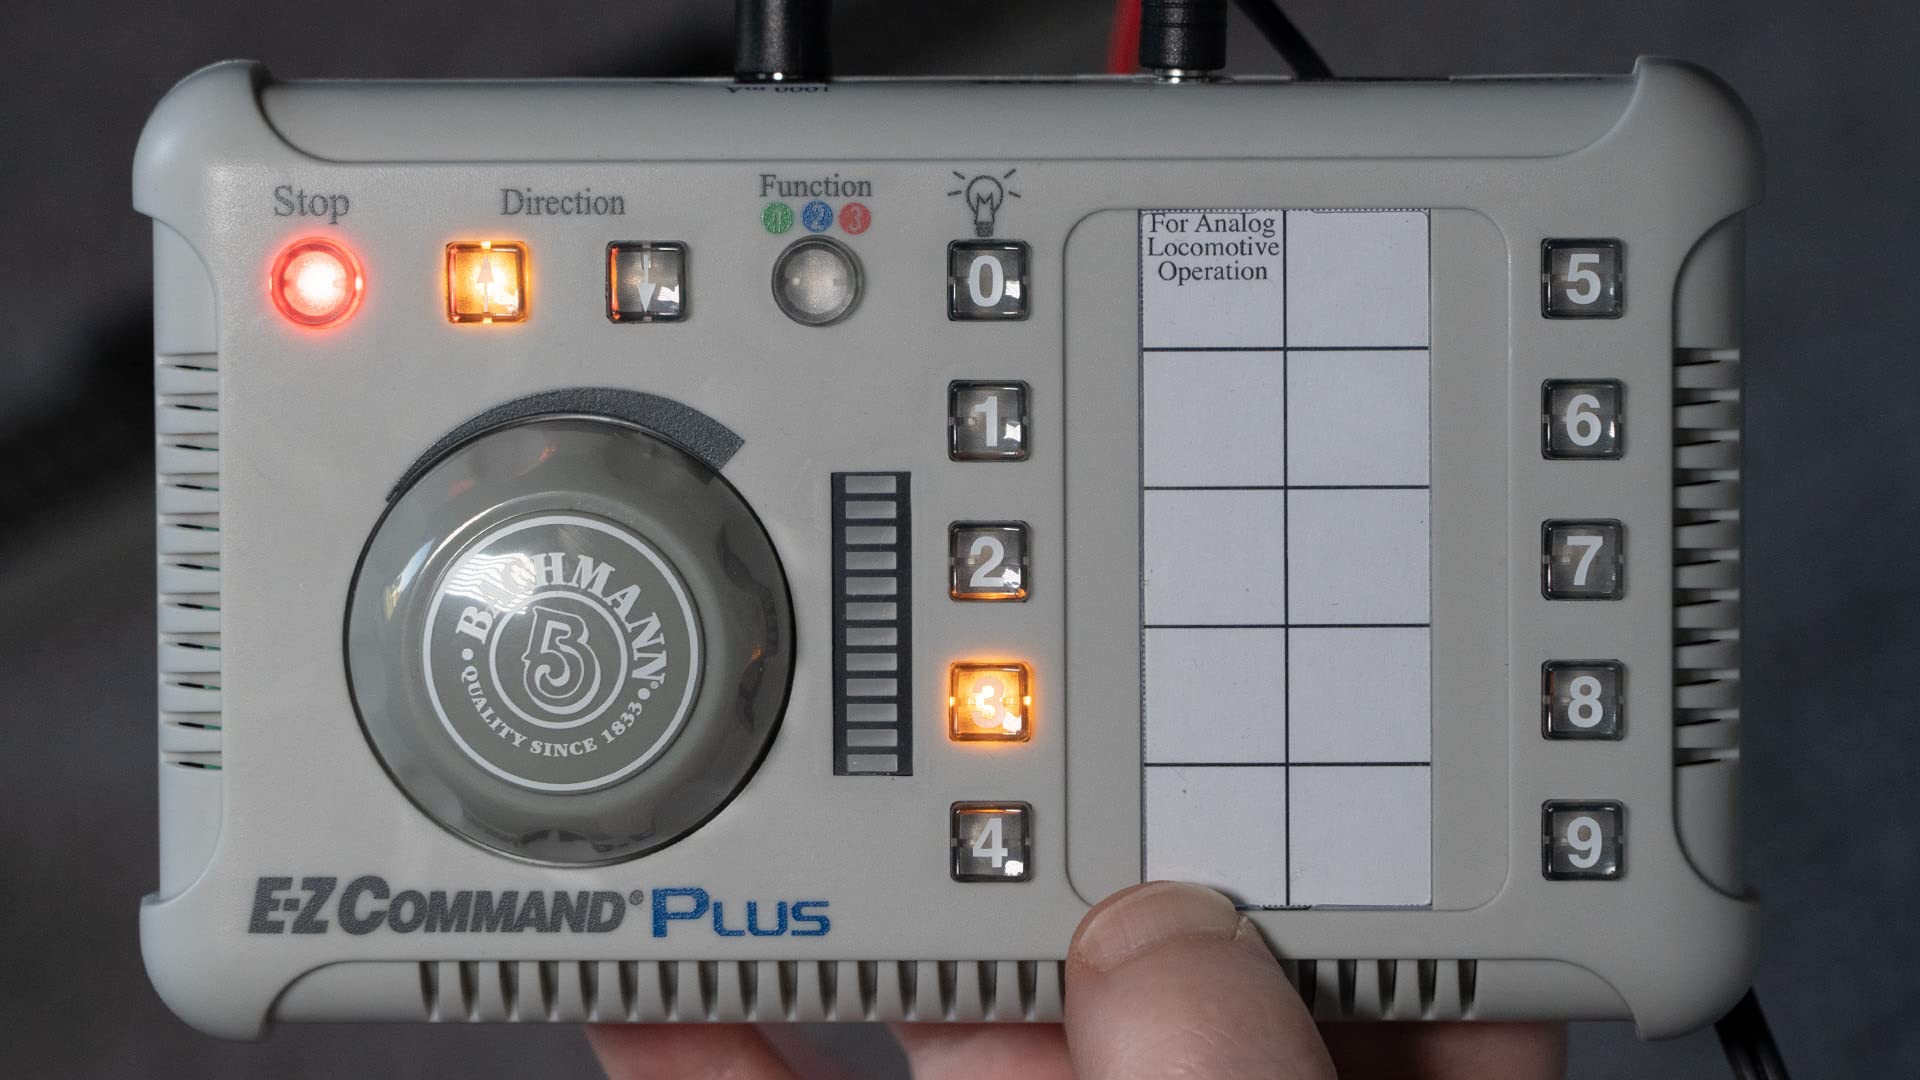 Bachmann Trains - E-Z Command Plus Digital Command Control System - Controller, Prototypical Colors